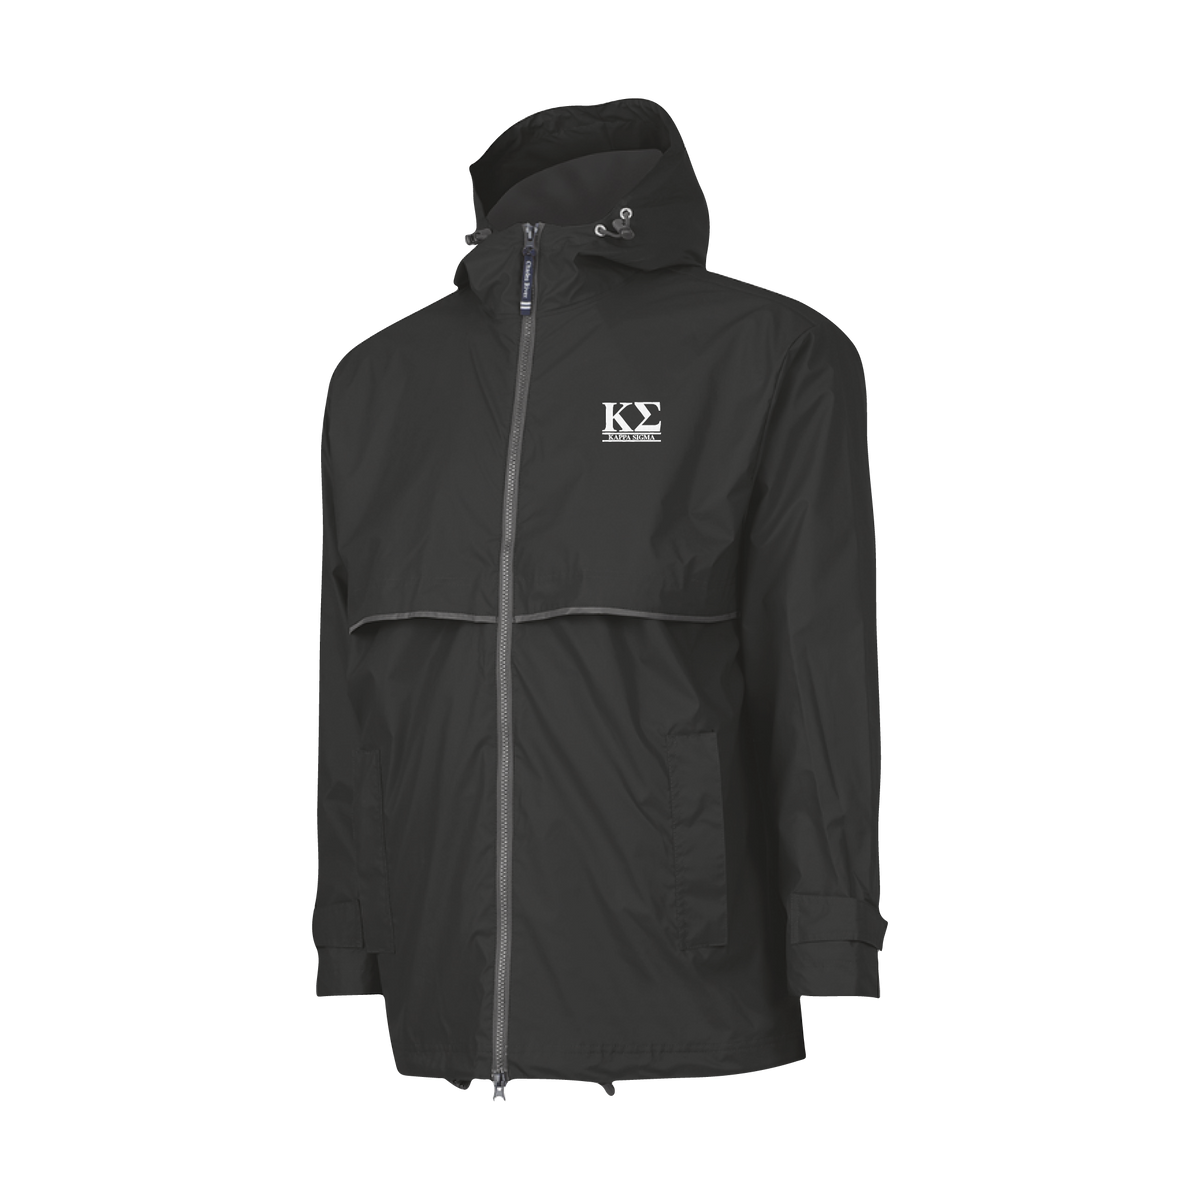 B-Unlimited Greek - Rain Jacket (KAPPA SIG) - Charles River - 9199 - New Englander Rain Jacket - Black